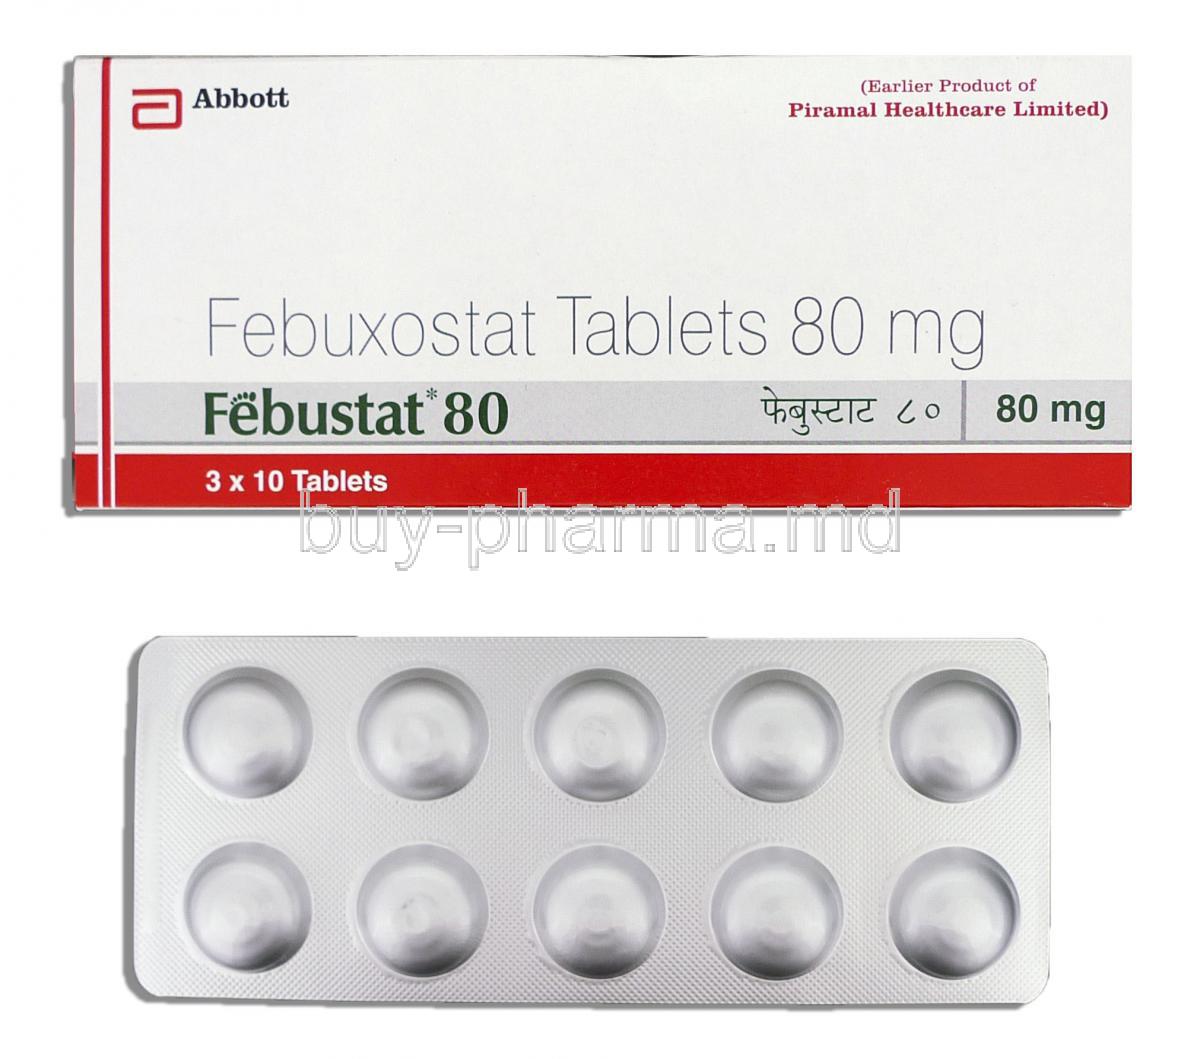 Febuxostat 80 mg